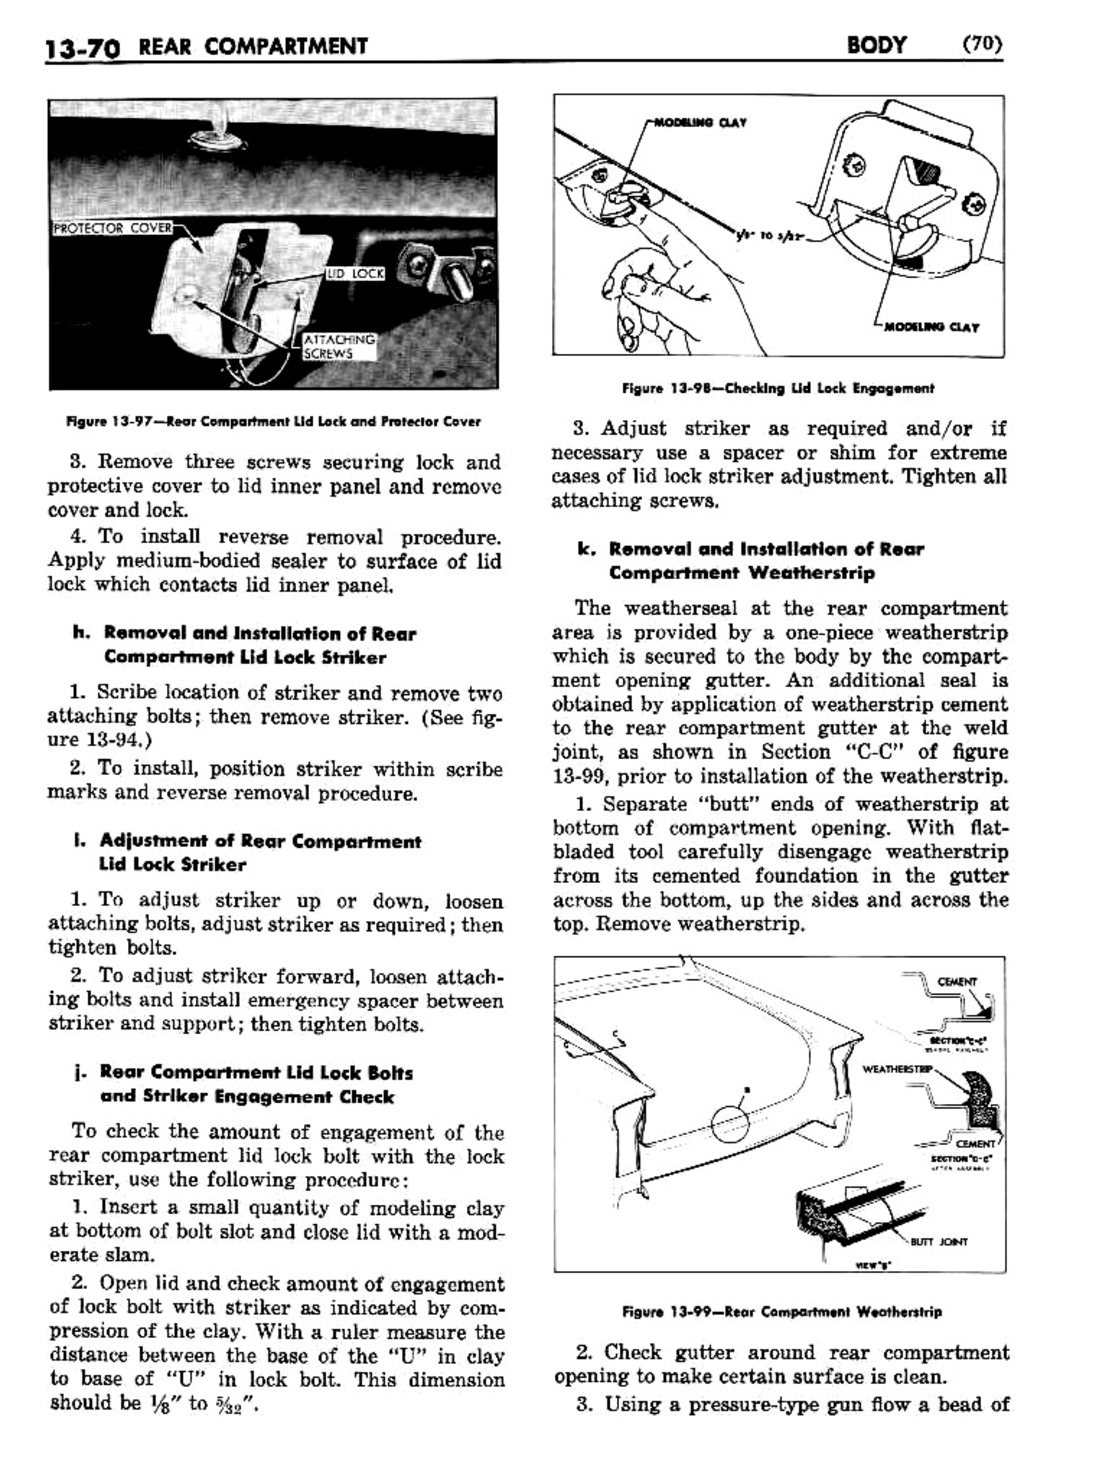 n_1957 Buick Body Service Manual-072-072.jpg